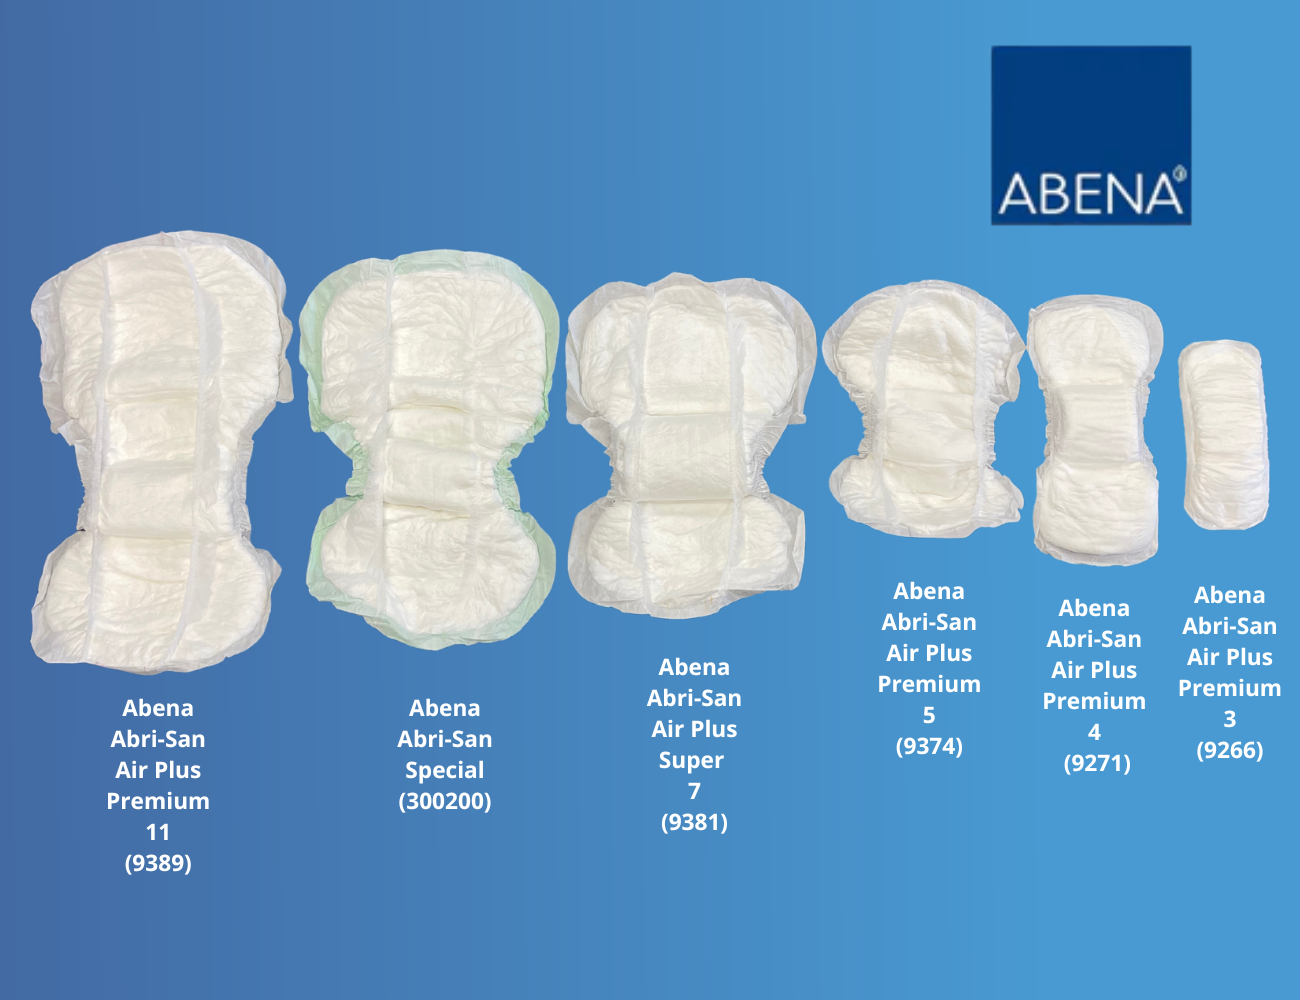 Buy Abena Abri-San Special Incontinence Pads [300200]